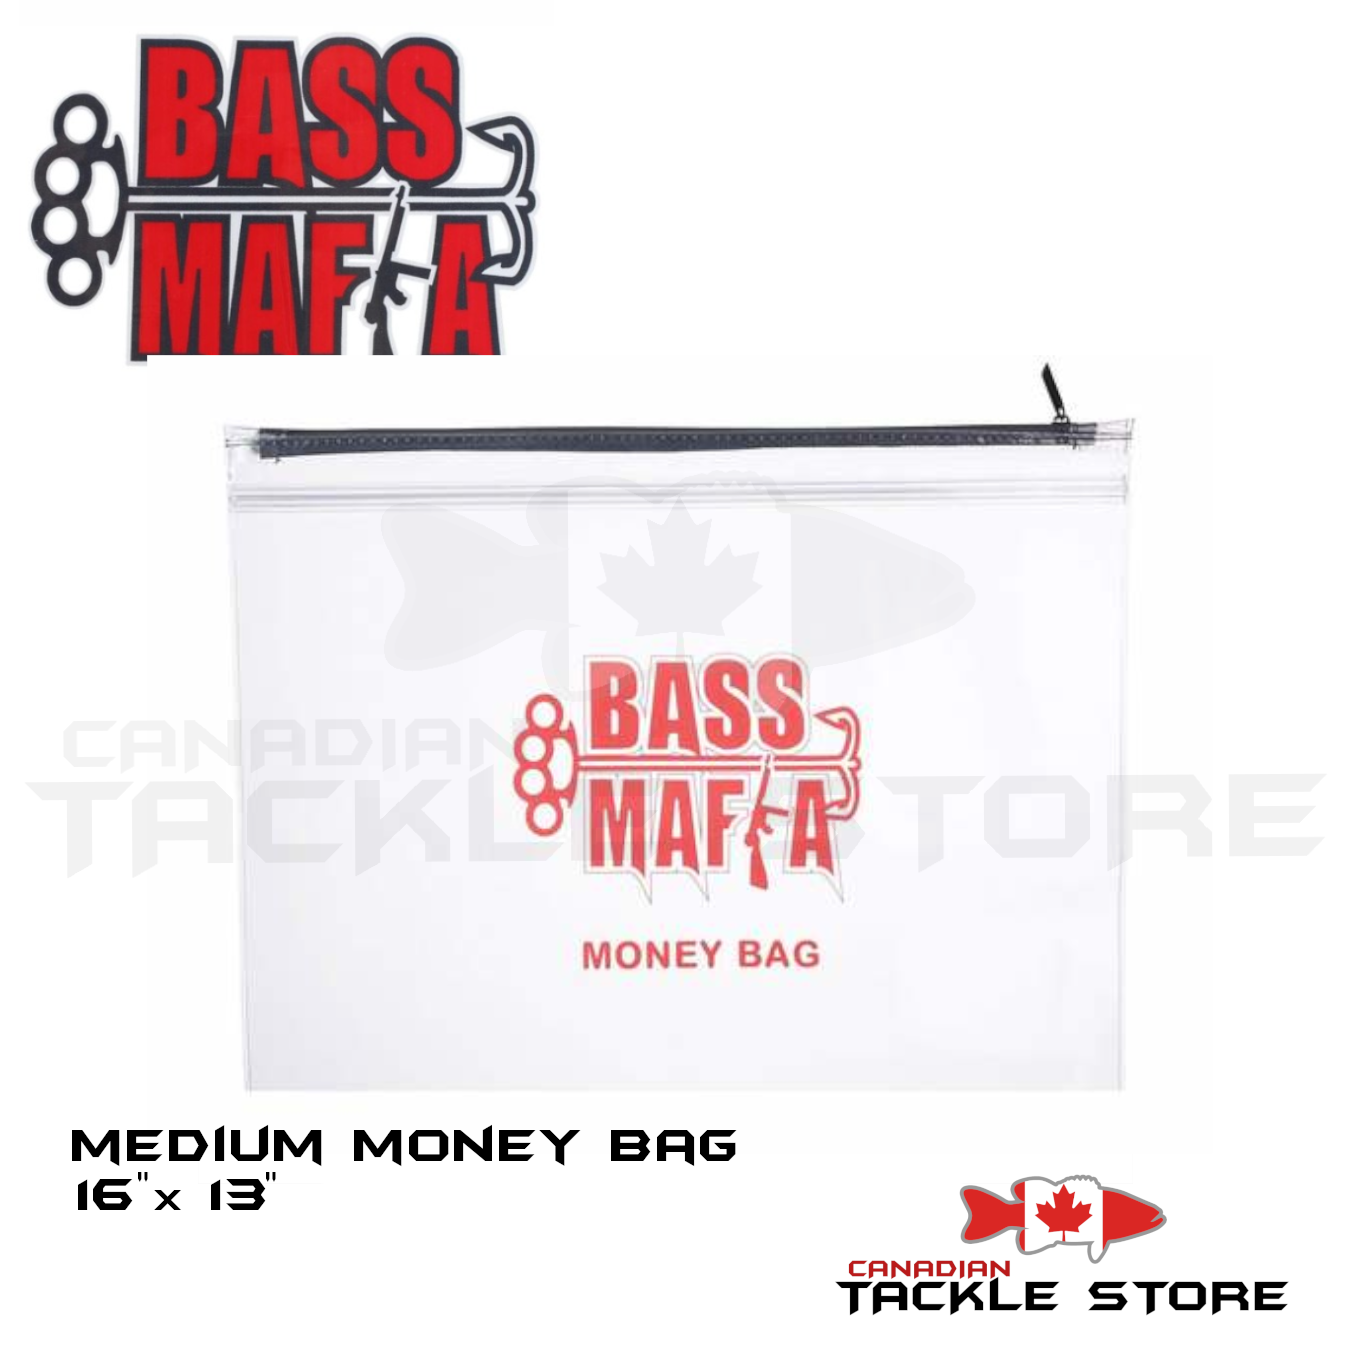 Bass Mafia Money Bag's – Canadian Tackle Store